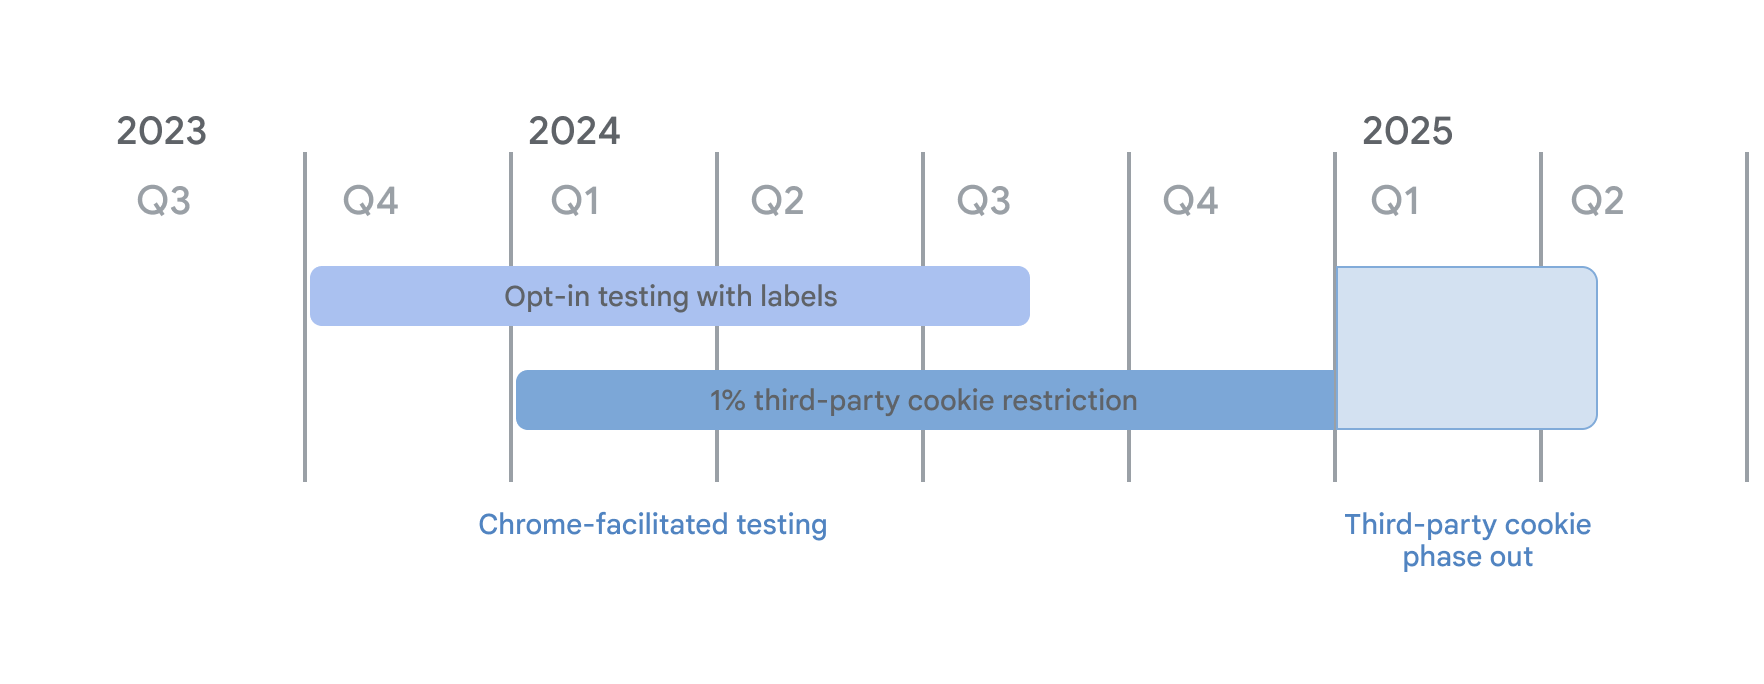 Linimasa penghentian cookie pihak ketiga. Sebagai bagian dari pengujian yang difasilitasi Chrome, pengujian keikutsertaan dengan mode label dimulai pada Kuartal 4 2023 dan pembatasan 3PC sebesar 1% mulai 4 Januari 2024. Keduanya berlanjut hingga Kuartal 1 2025 saat penghentian cookie pihak ketiga dimulai.